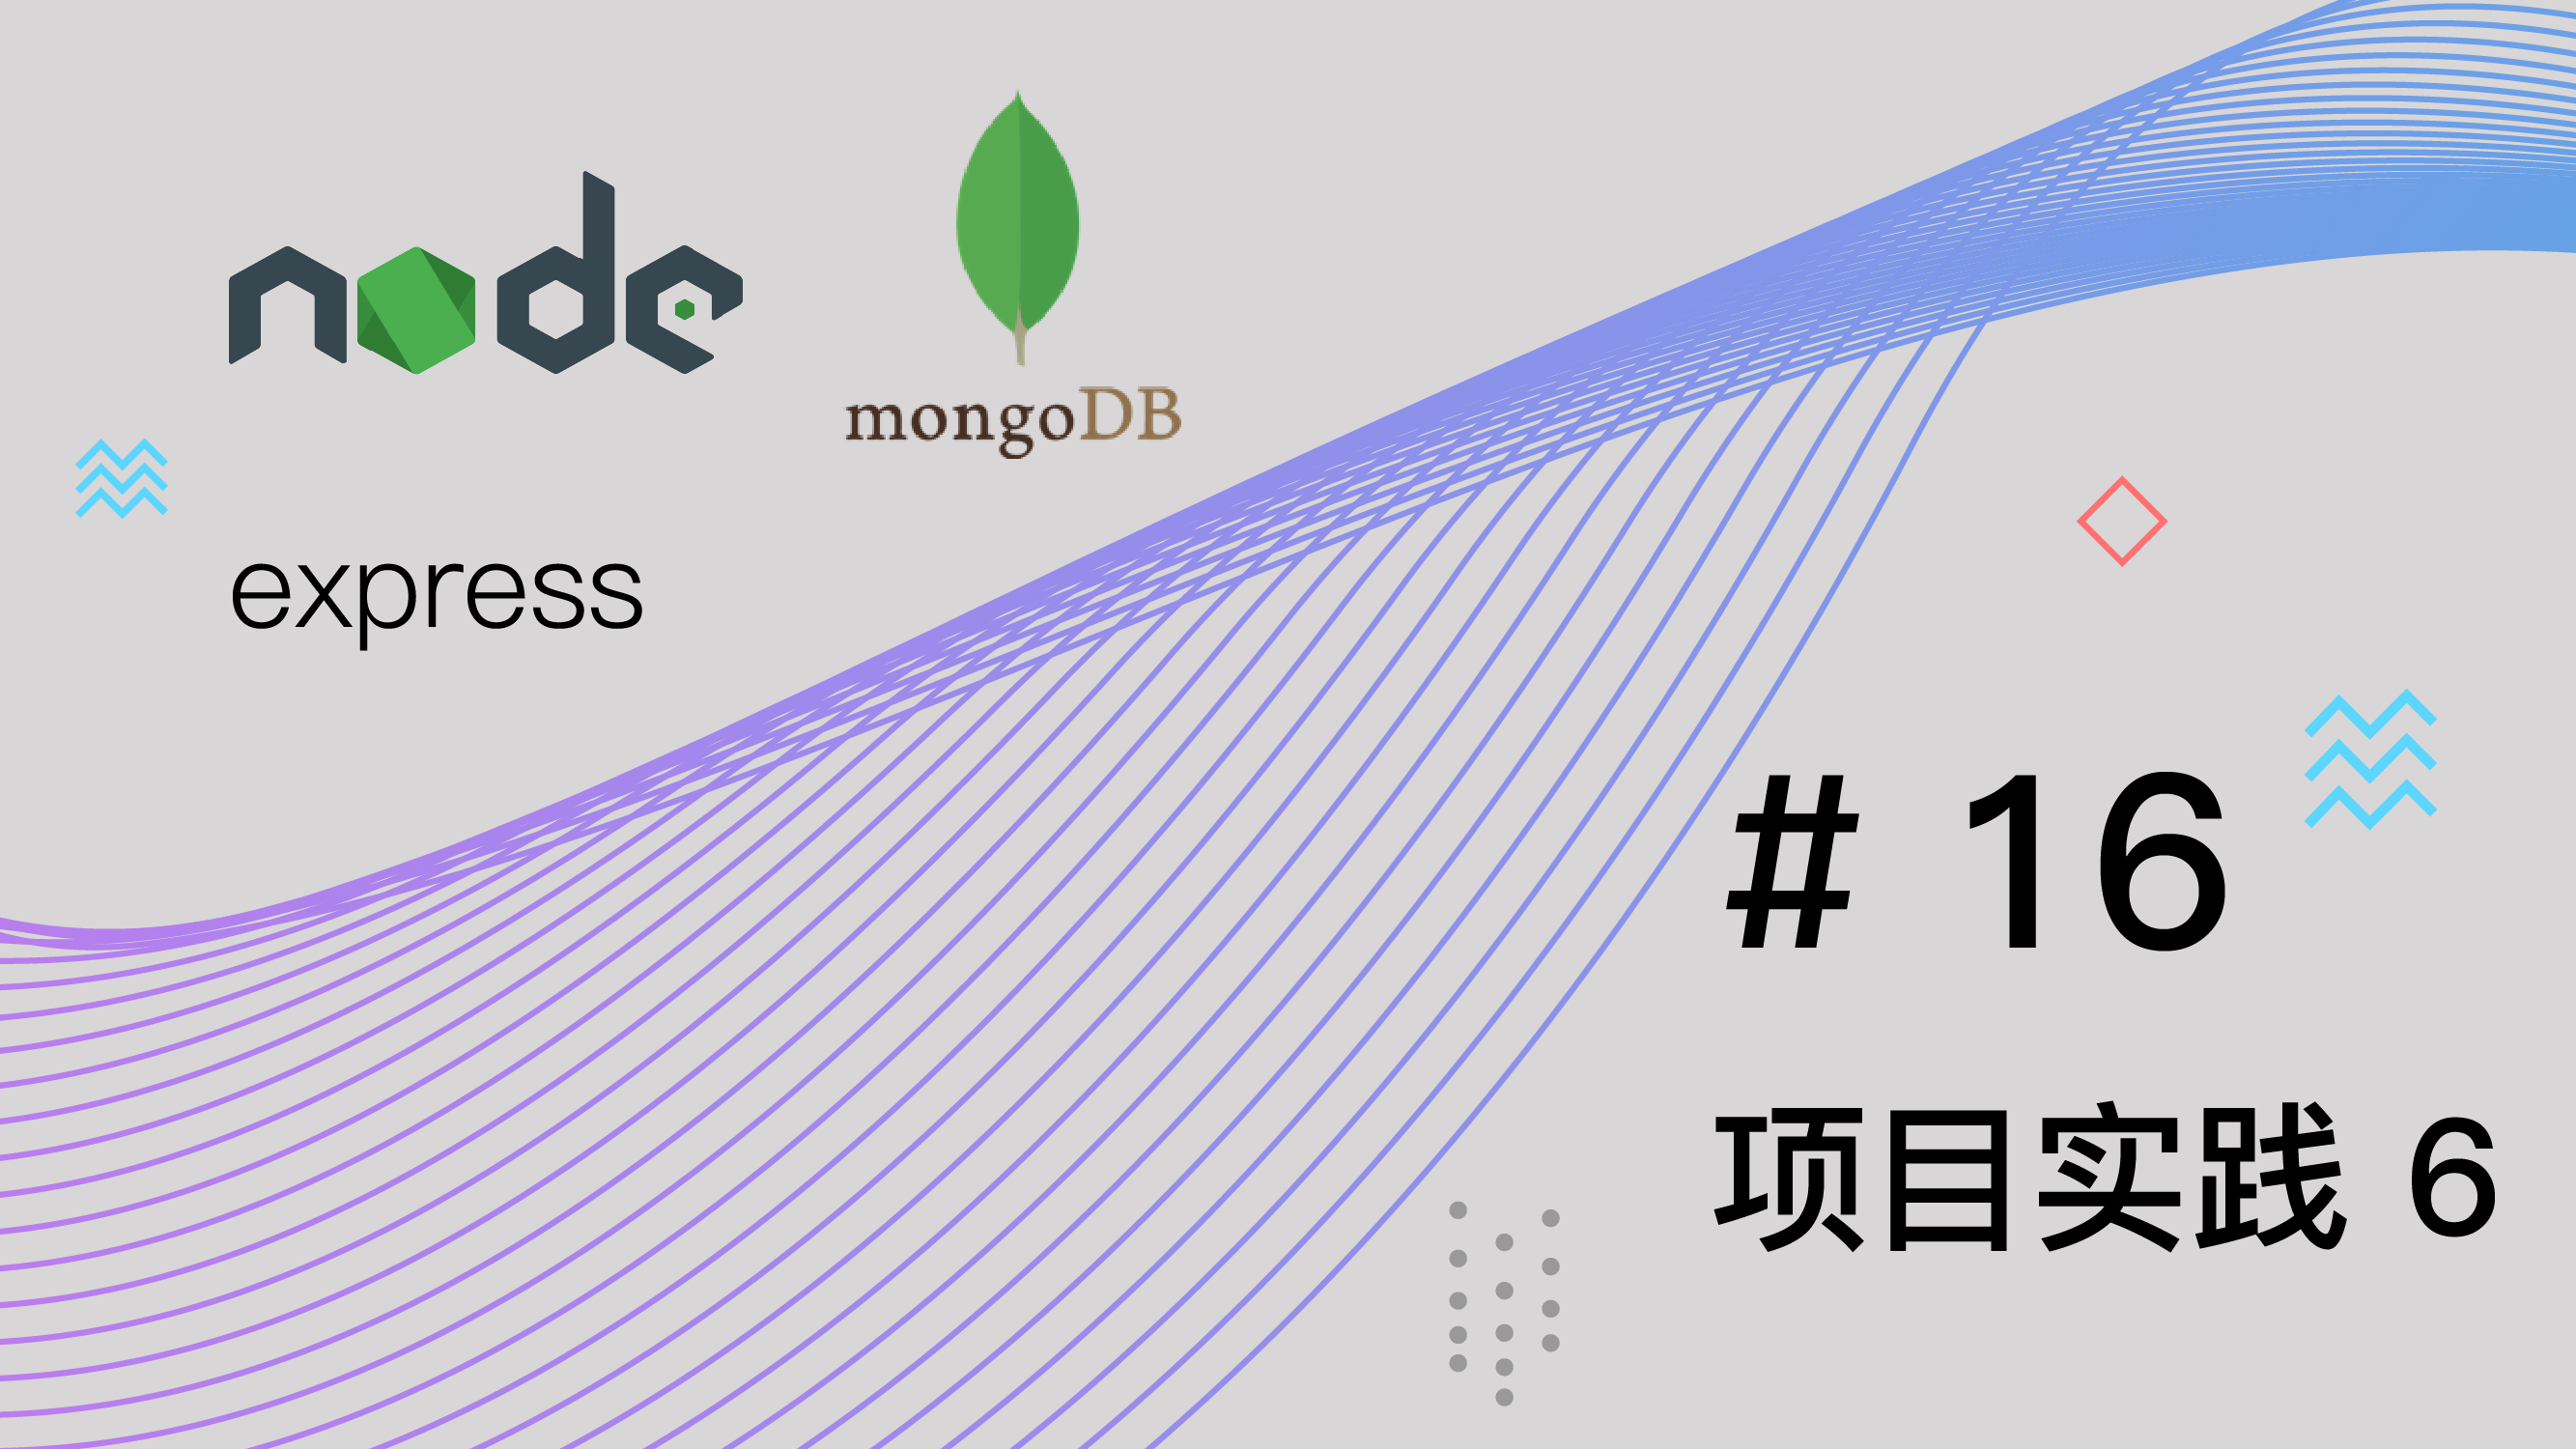 Node.js + Express + MongoDB 基础篇视频教程 #16 项目实践 part 6 Mongoose